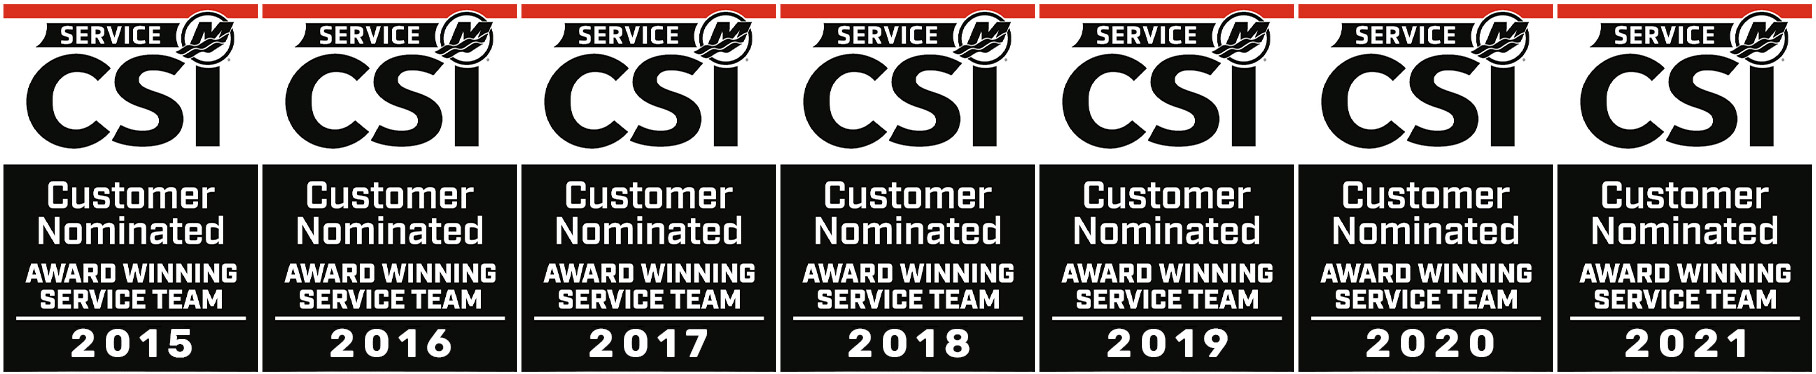 Mercury Service CSI Award - Our Customers Have Spoken, Buckeye Sports Center has won the Mercury Service CSI Award 7 Years in a Row!